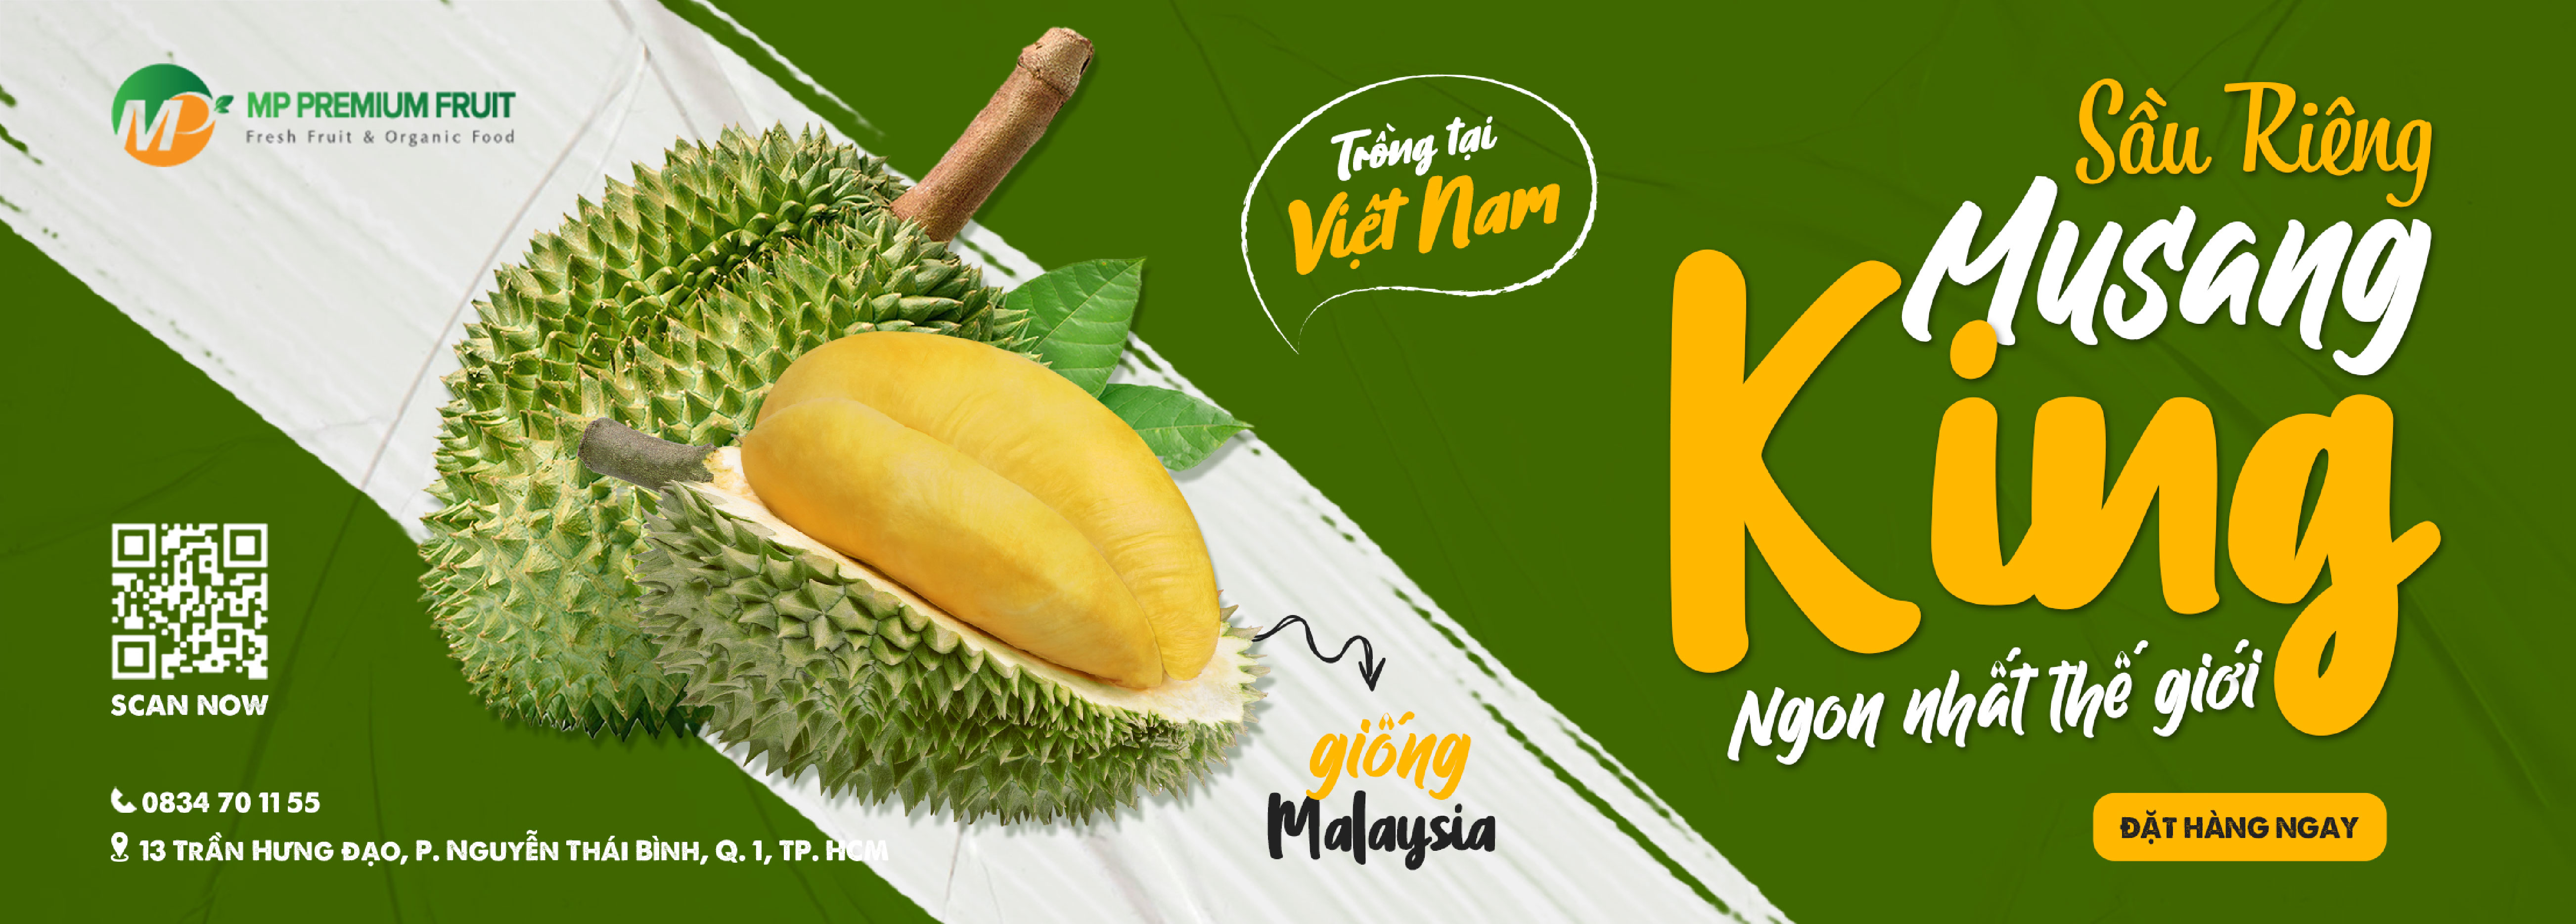 Sầu Riêng Musang King Giống Malaysia tại MP Fruit